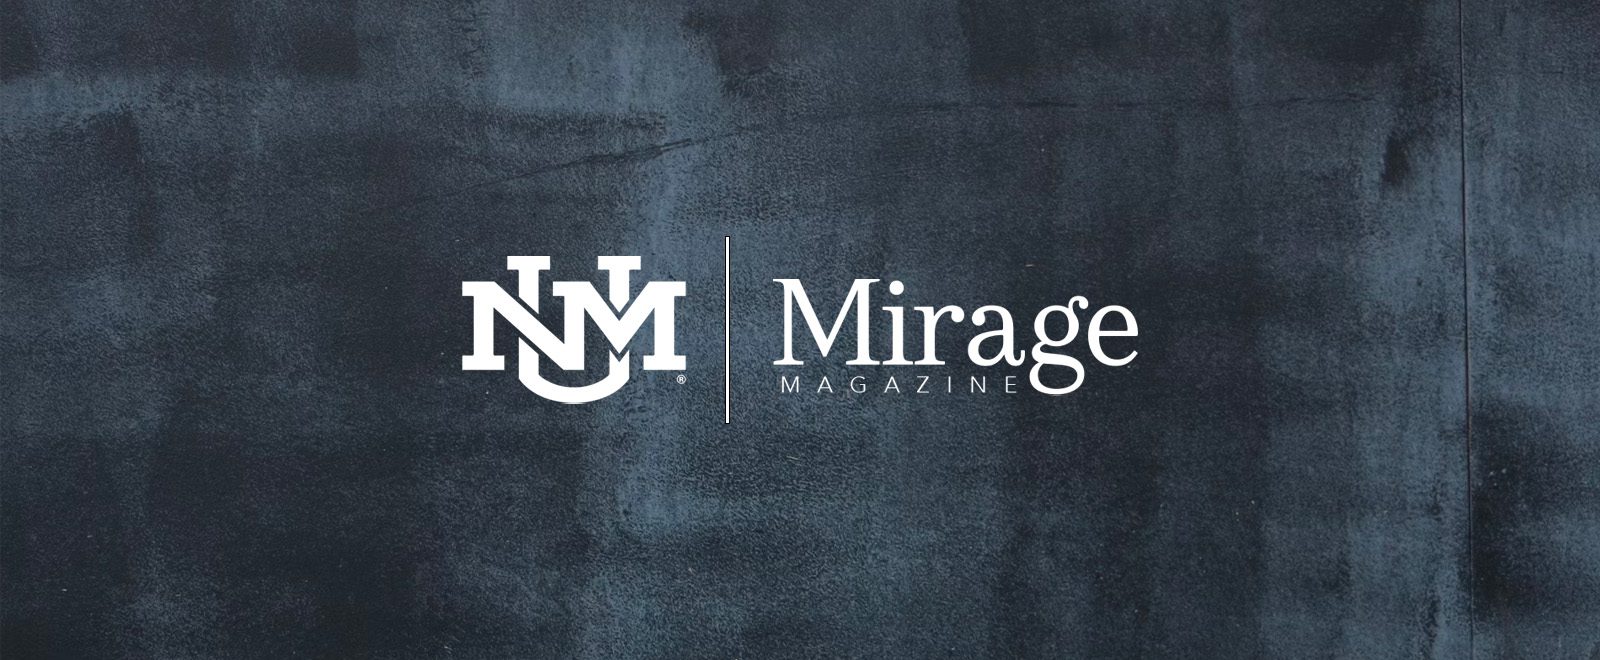 Mirage Magazine and UNM logos over an erased blackboard